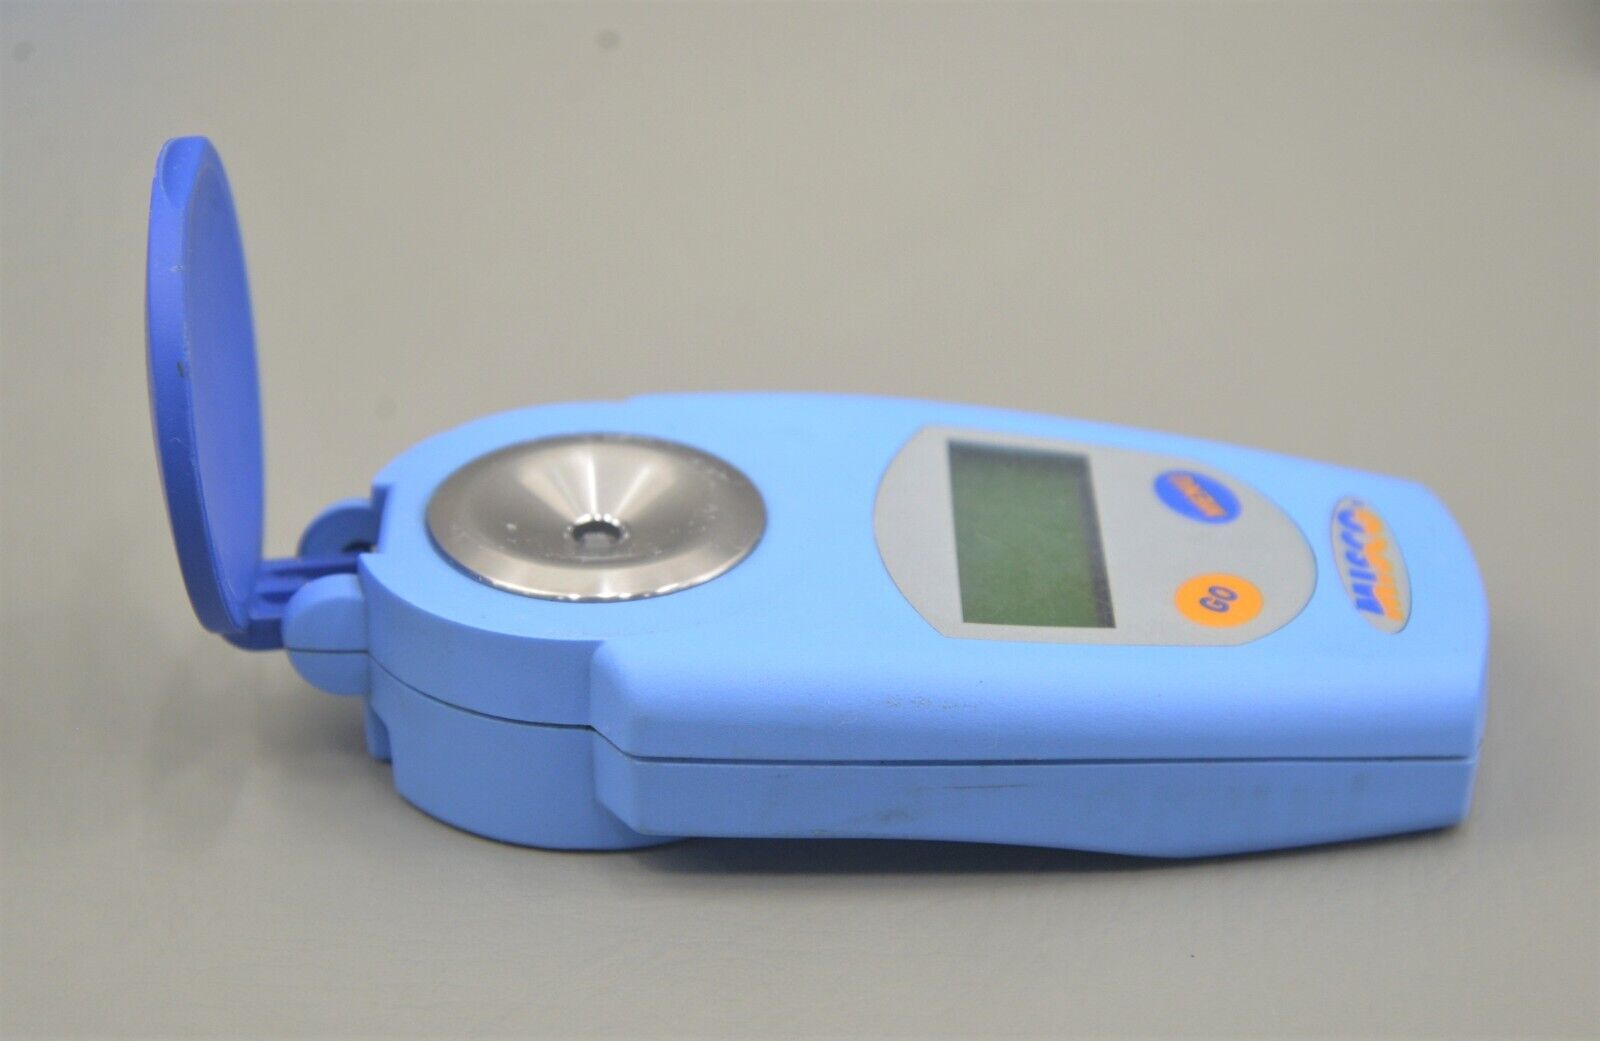 Buy Misco PA201, Digital Brix Refractometer, Brix Only (0 to 56) - Prime  Lab Med